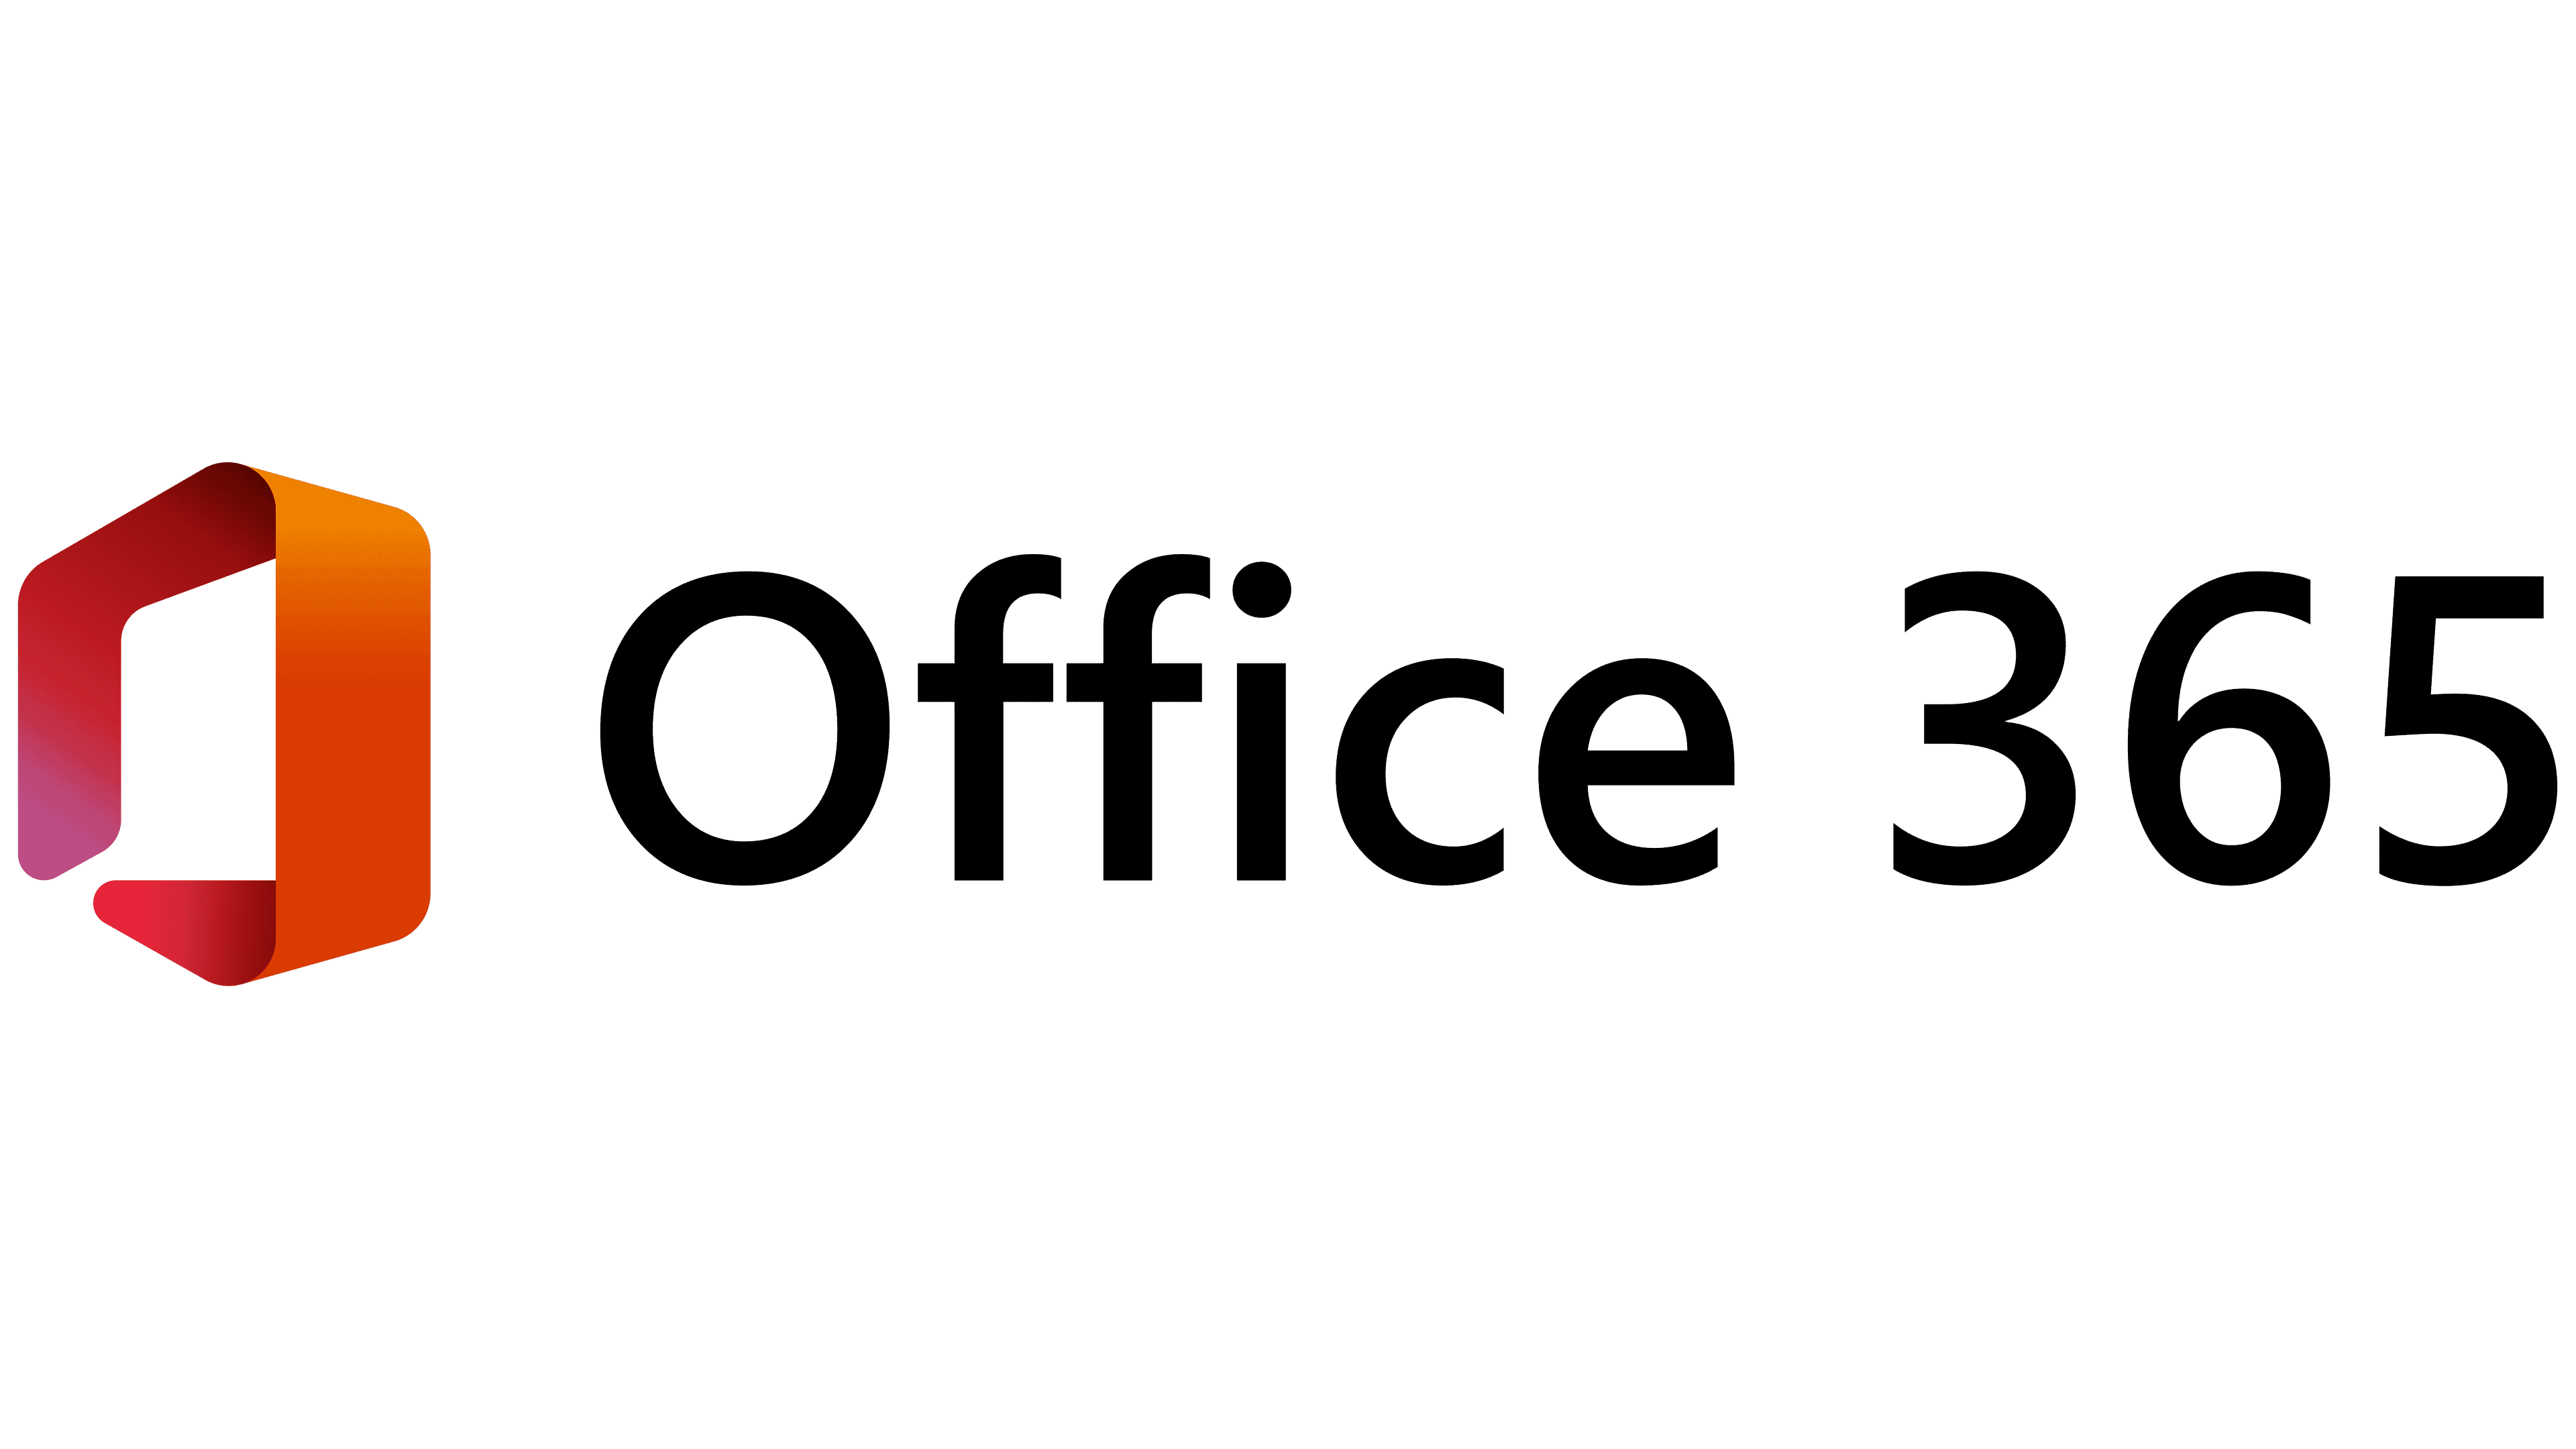 Microsoft Office 365 Logo | Symbol, History, PNG (3840*2160)